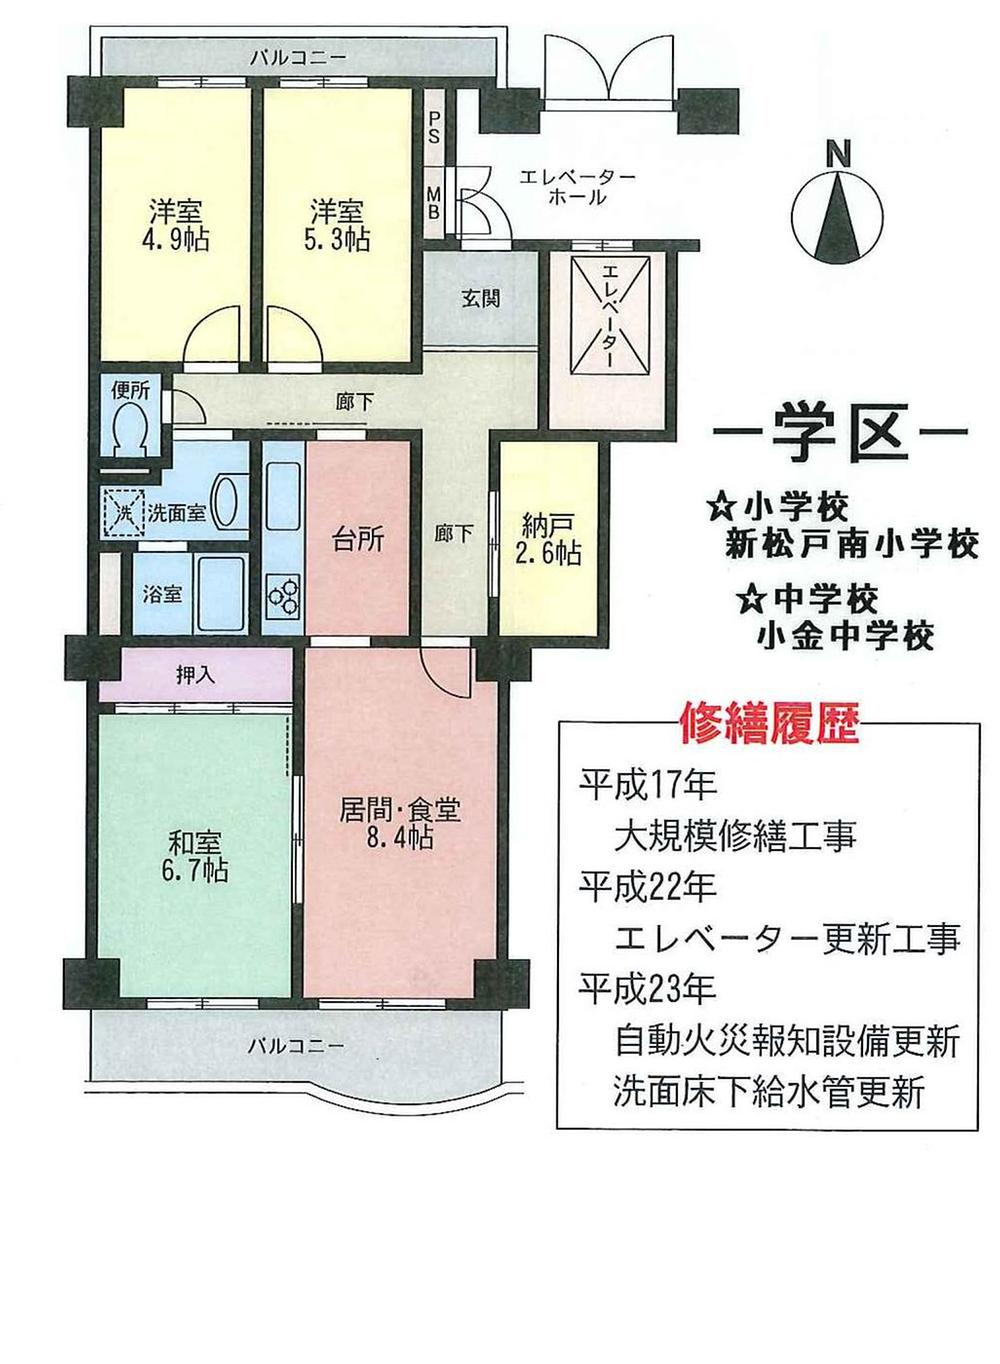 Floor plan. 3LDK + S (storeroom), Price 15.3 million yen, Occupied area 72.79 sq m , Balcony area 10.44 sq m